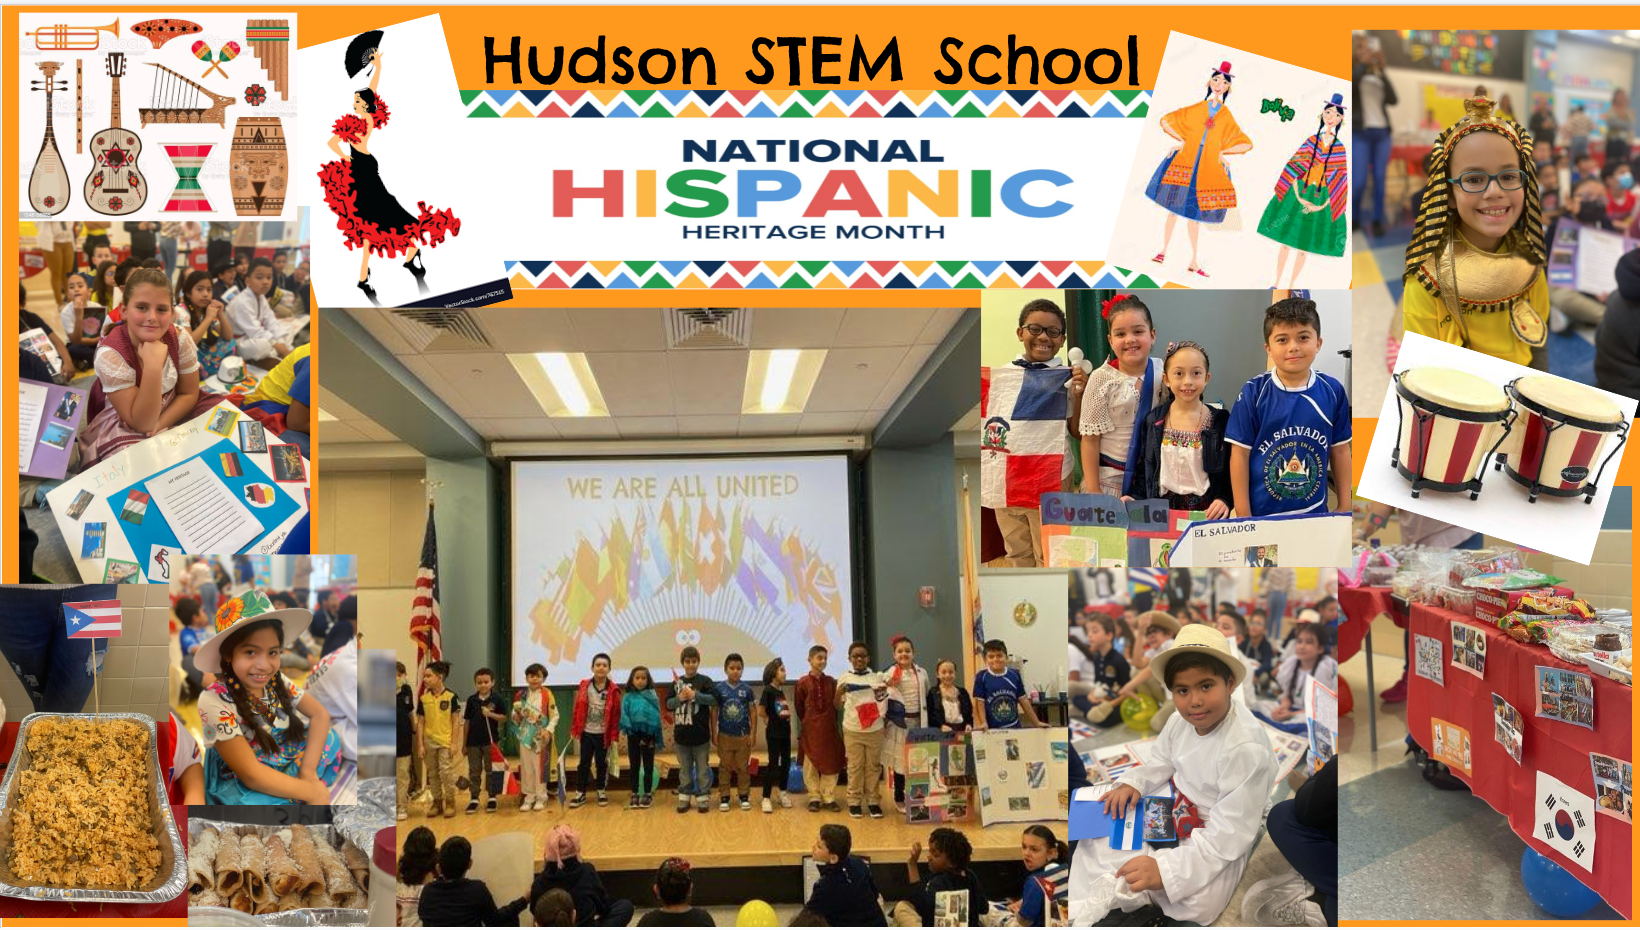 Hudson STEM School celebrating Hispanic Heritage Month